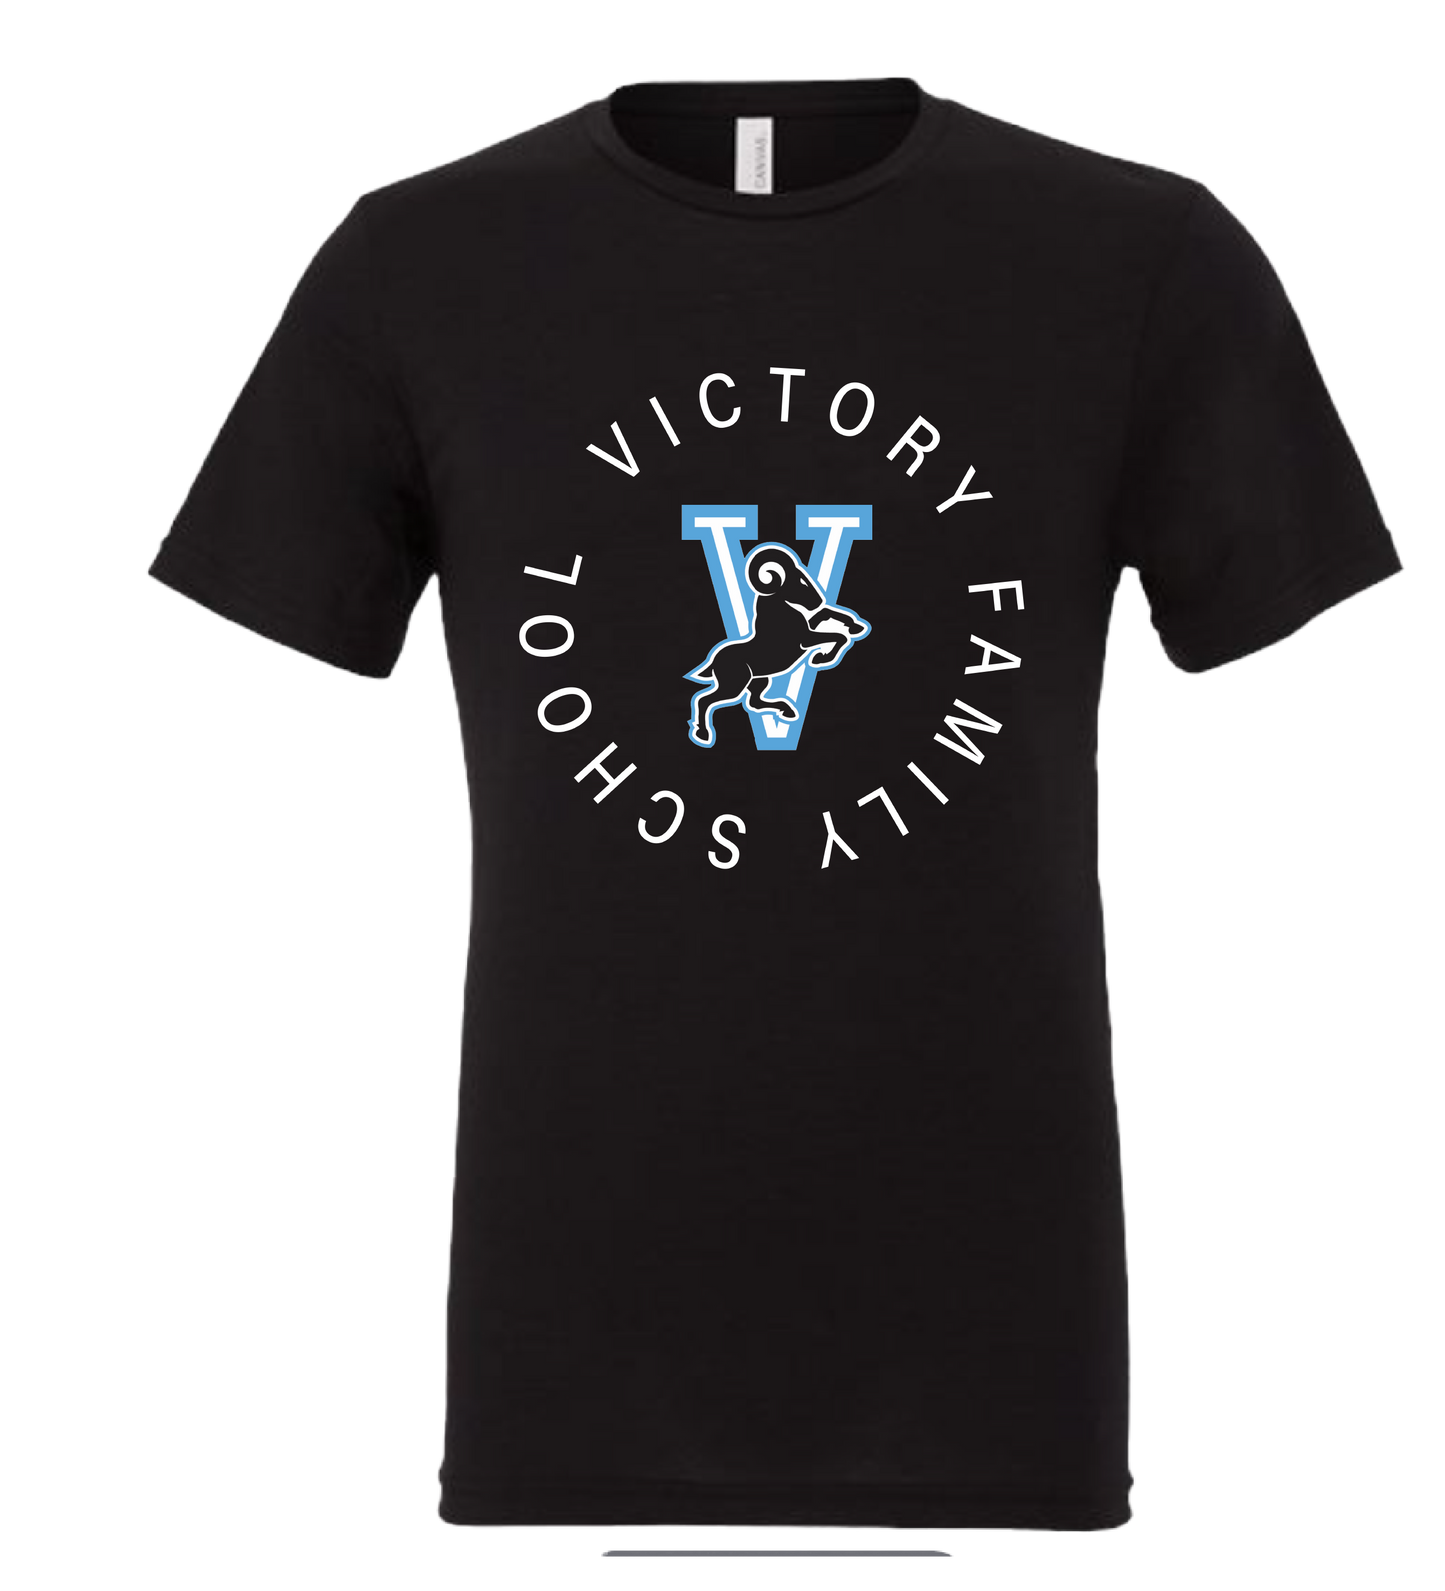 Victory Family School athletic V t-shirt